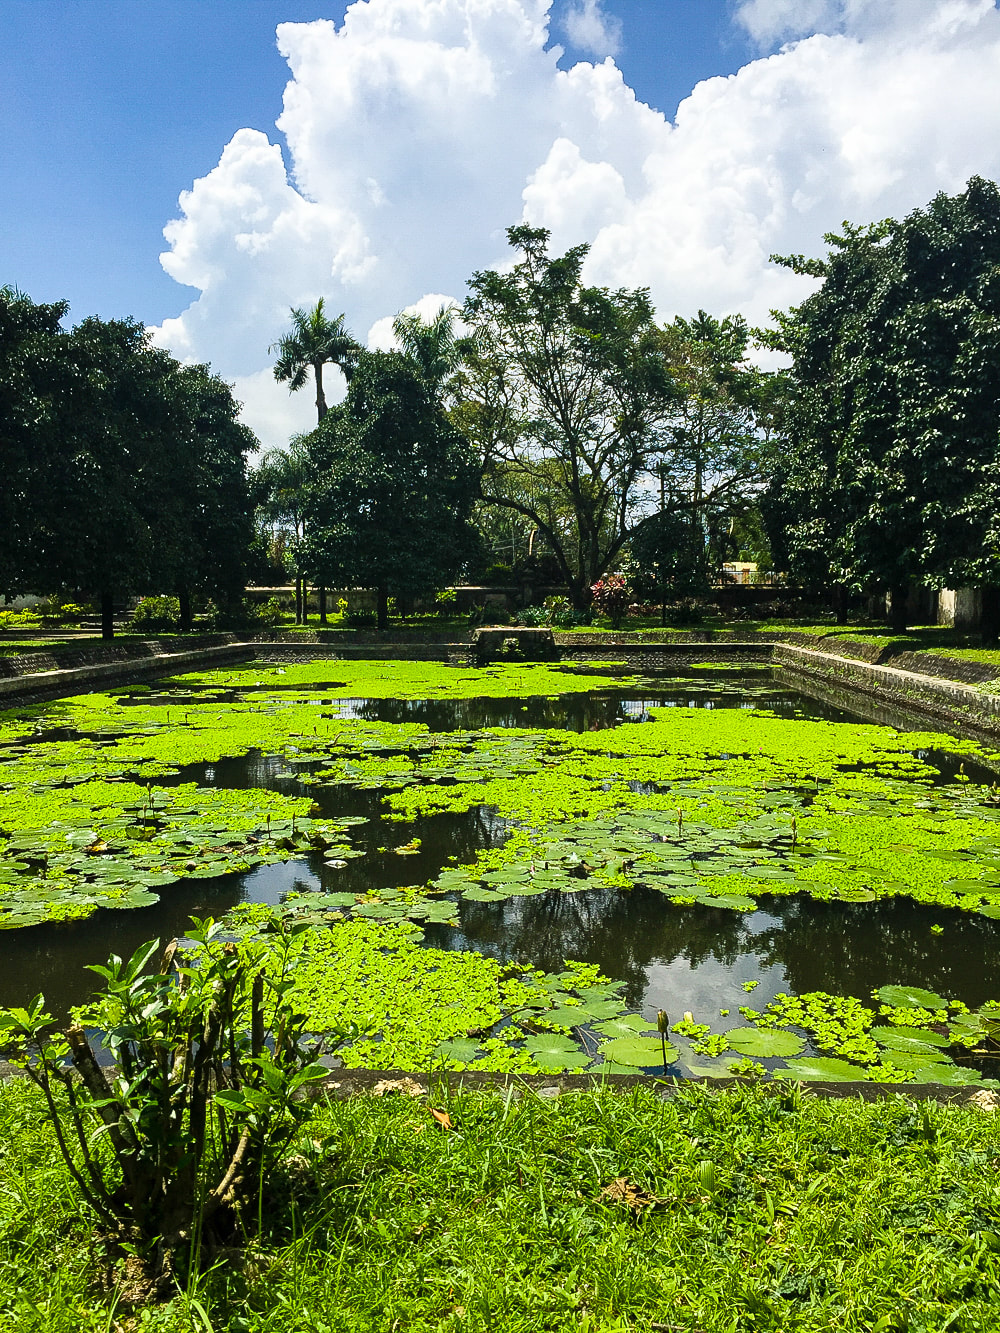 Lily pad pool - Taman Narmada (Narmada Park), Mataram, Lombok, Indonesia.